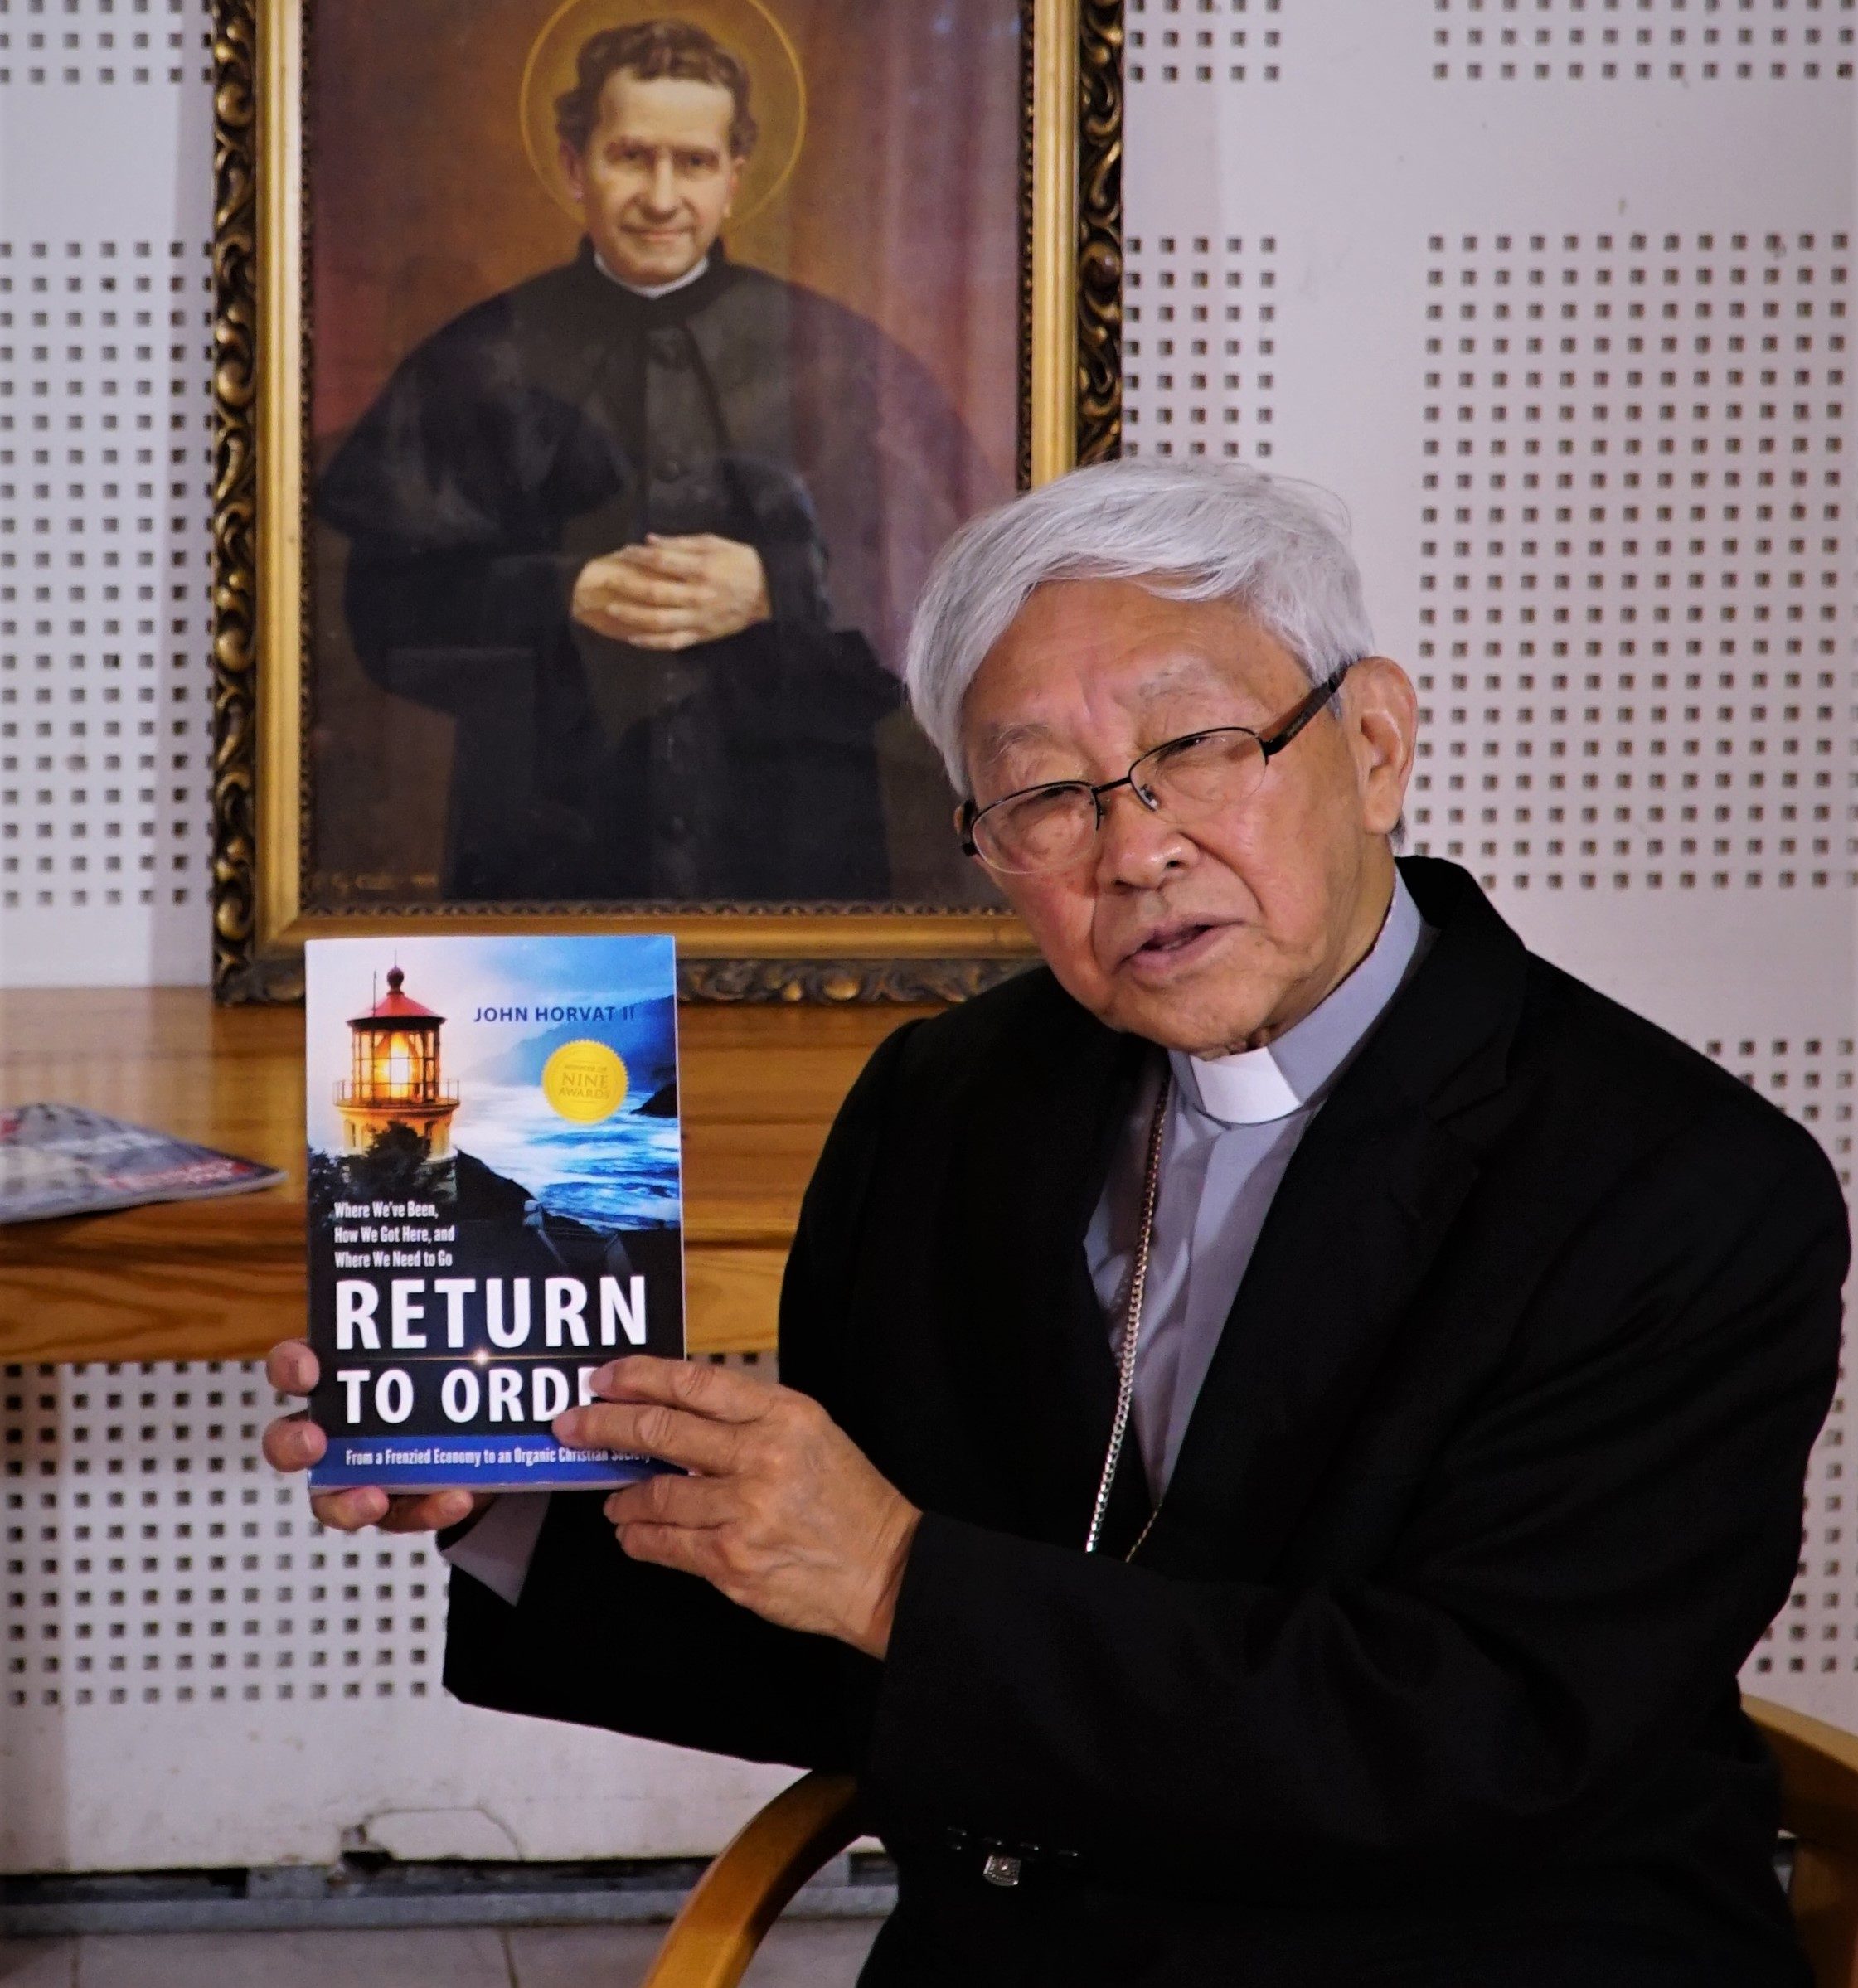 Return to Order Cardinal Zen Receives ‘Return to Order’